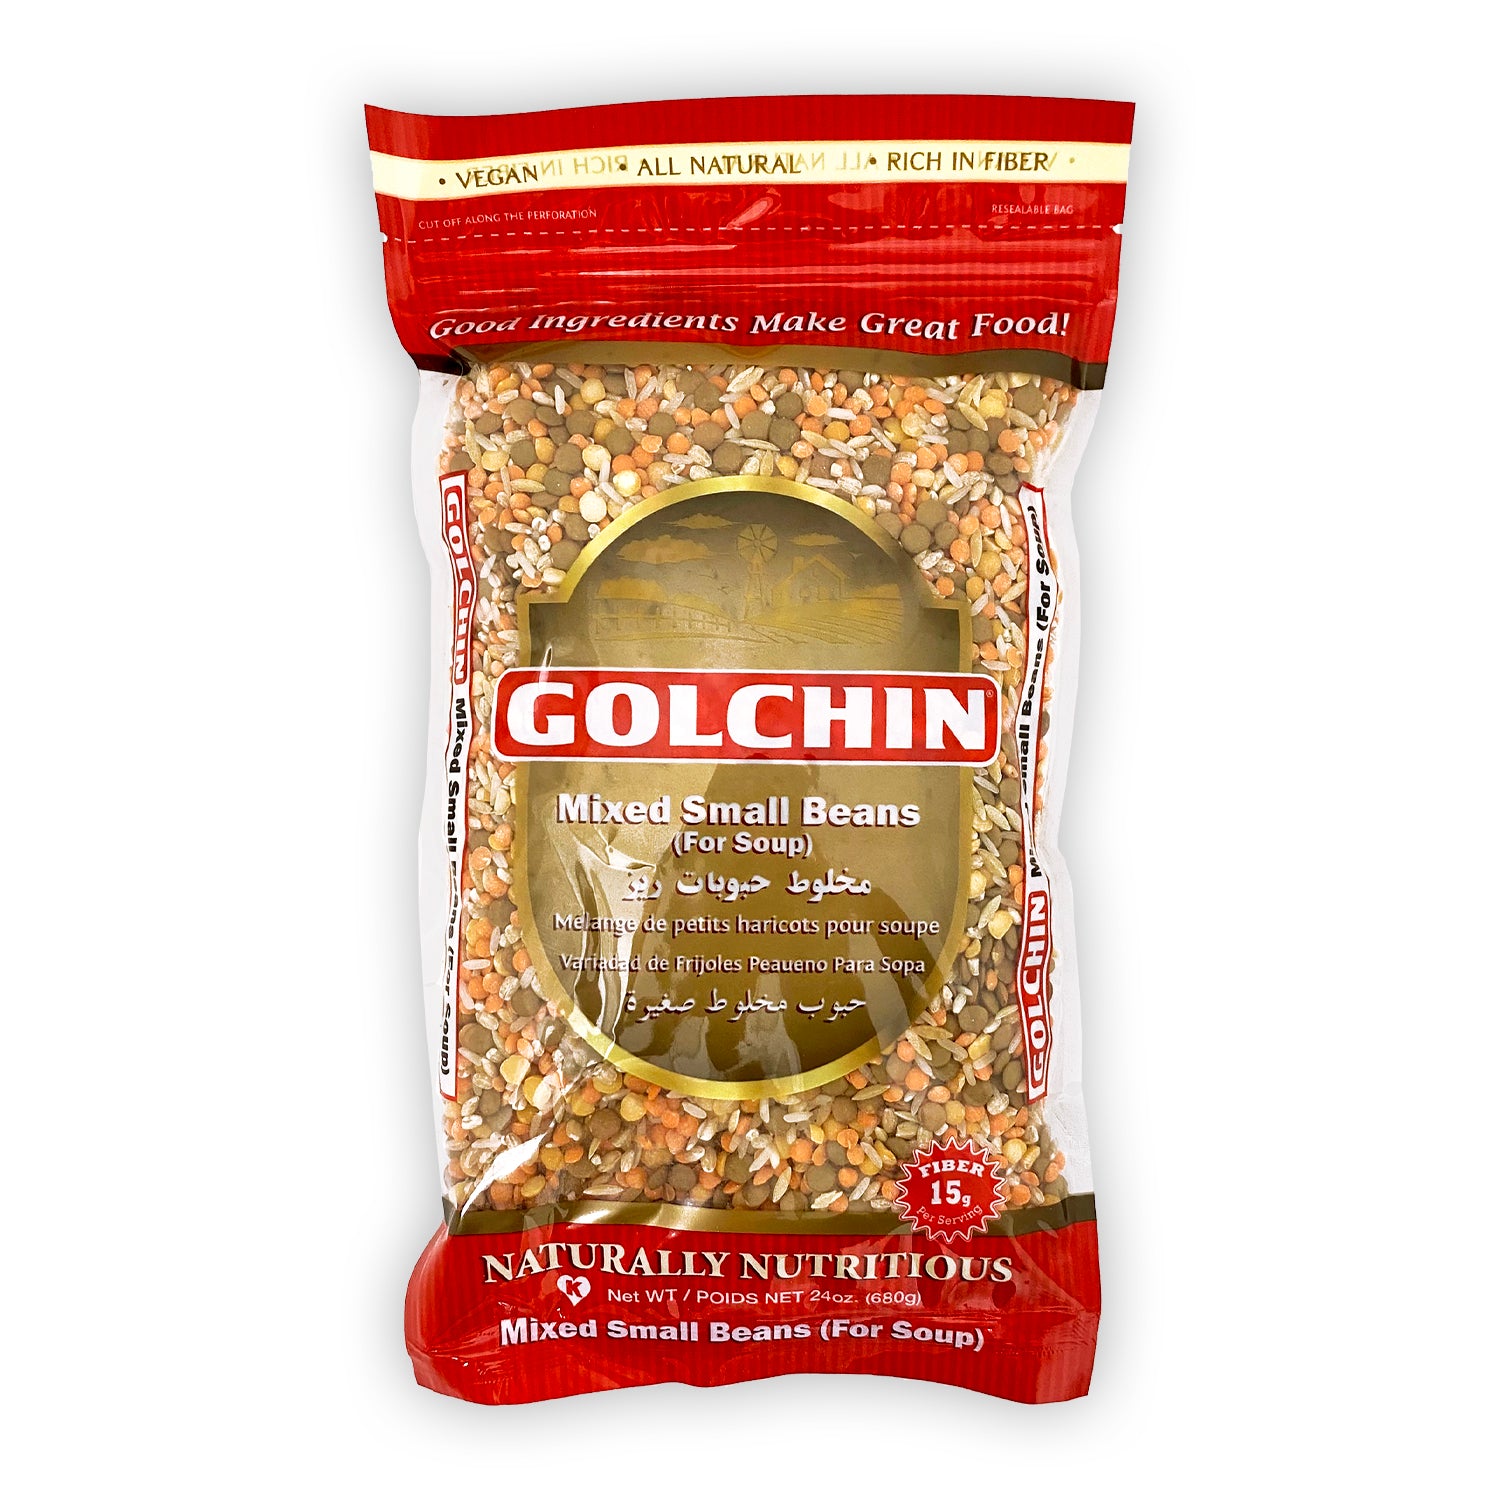 GOLCHIN MIXED SMALL BEANS (26 pcks)